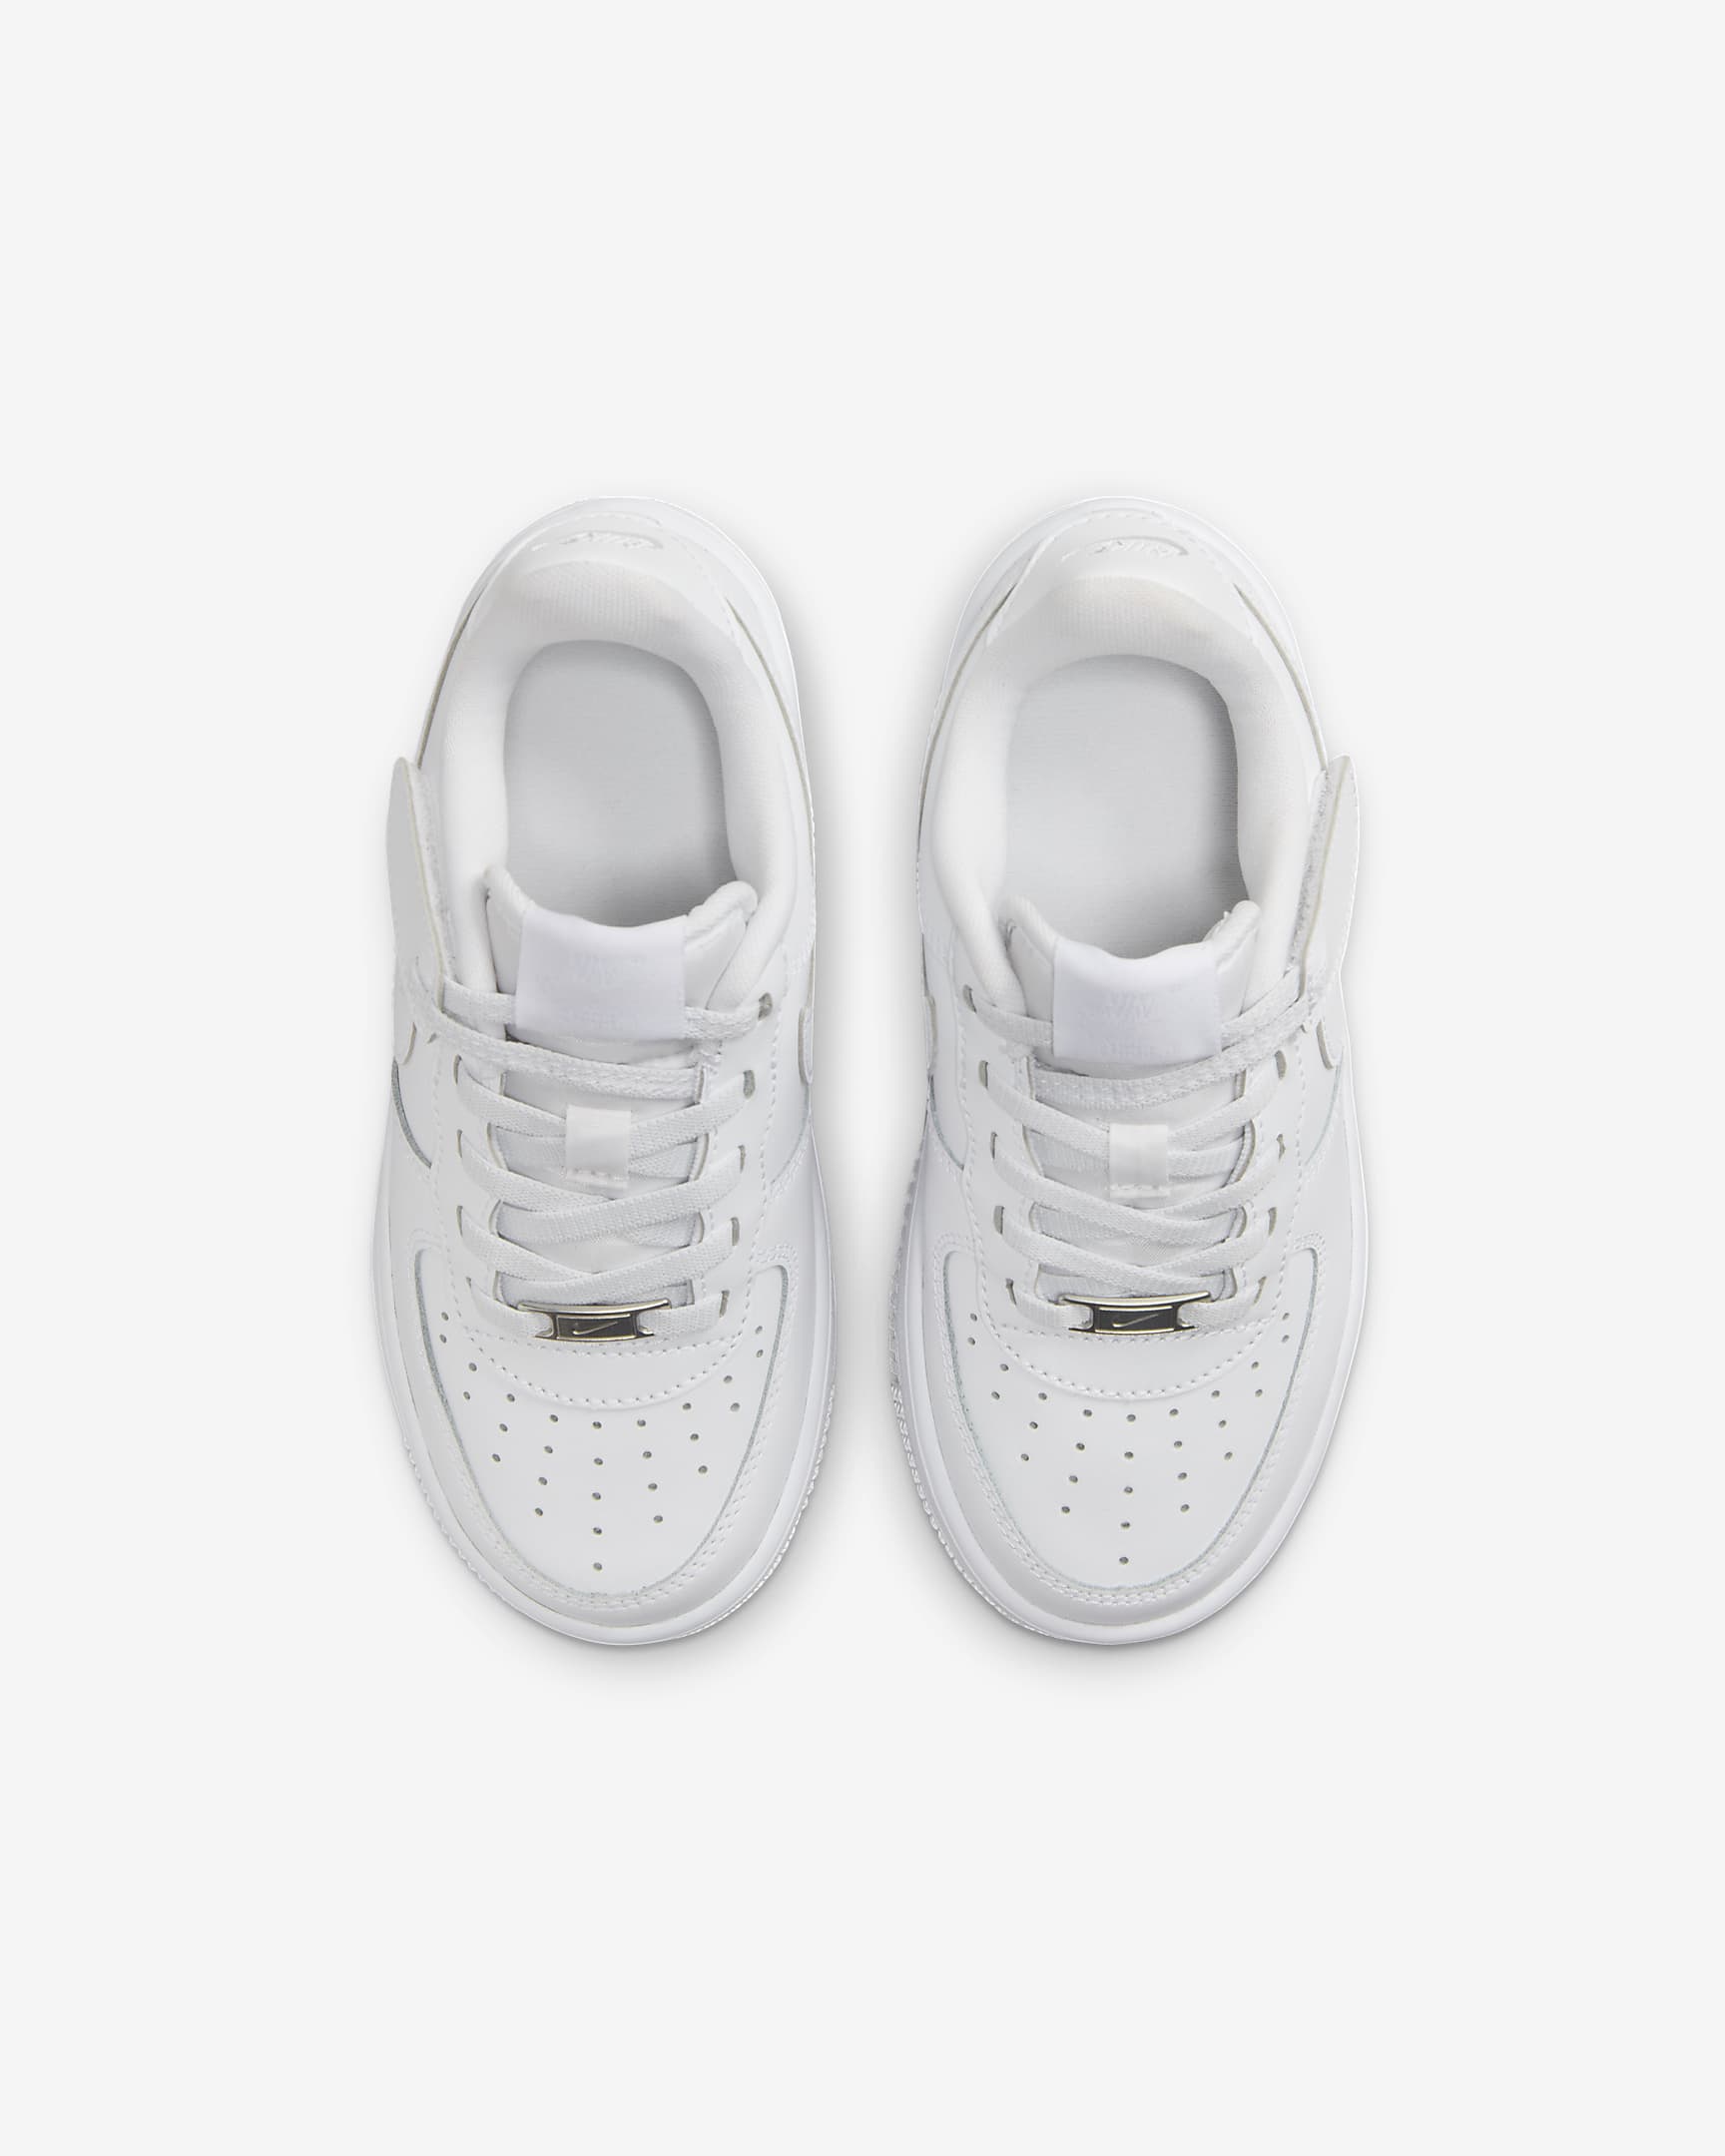 Calzado para niños de preescolar Nike Force 1 Low EasyOn - Blanco/Blanco/Blanco